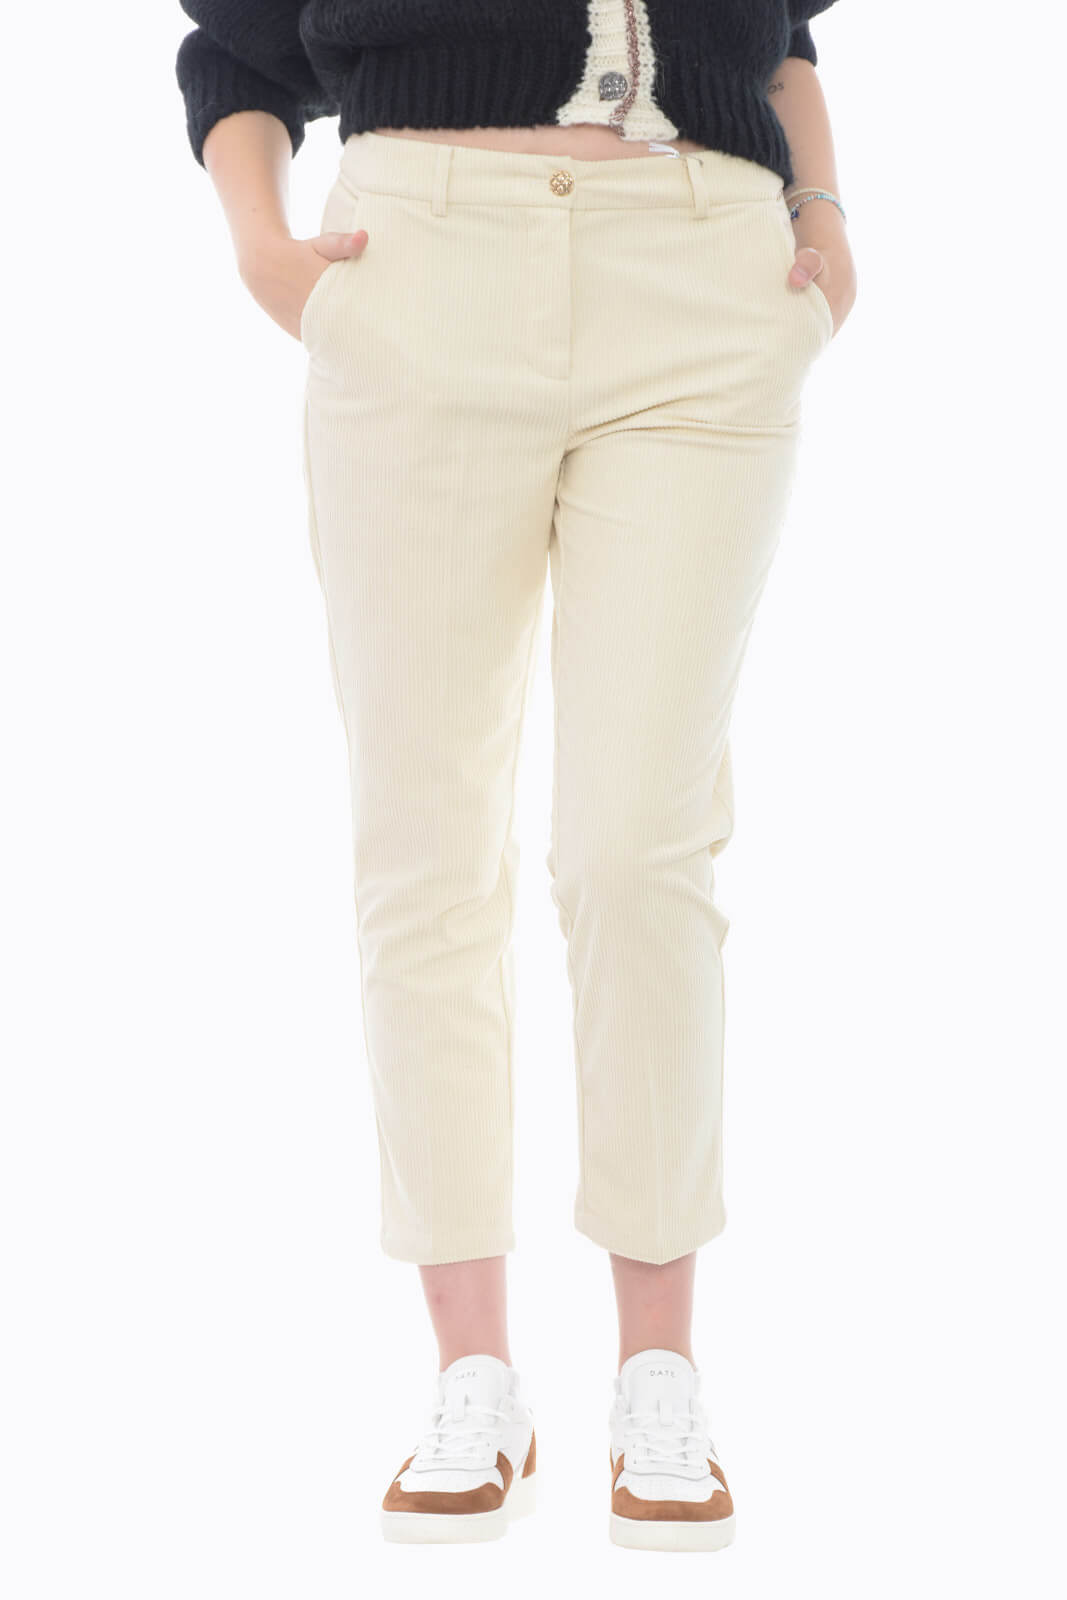 Liu Jo women's corduroy trousers